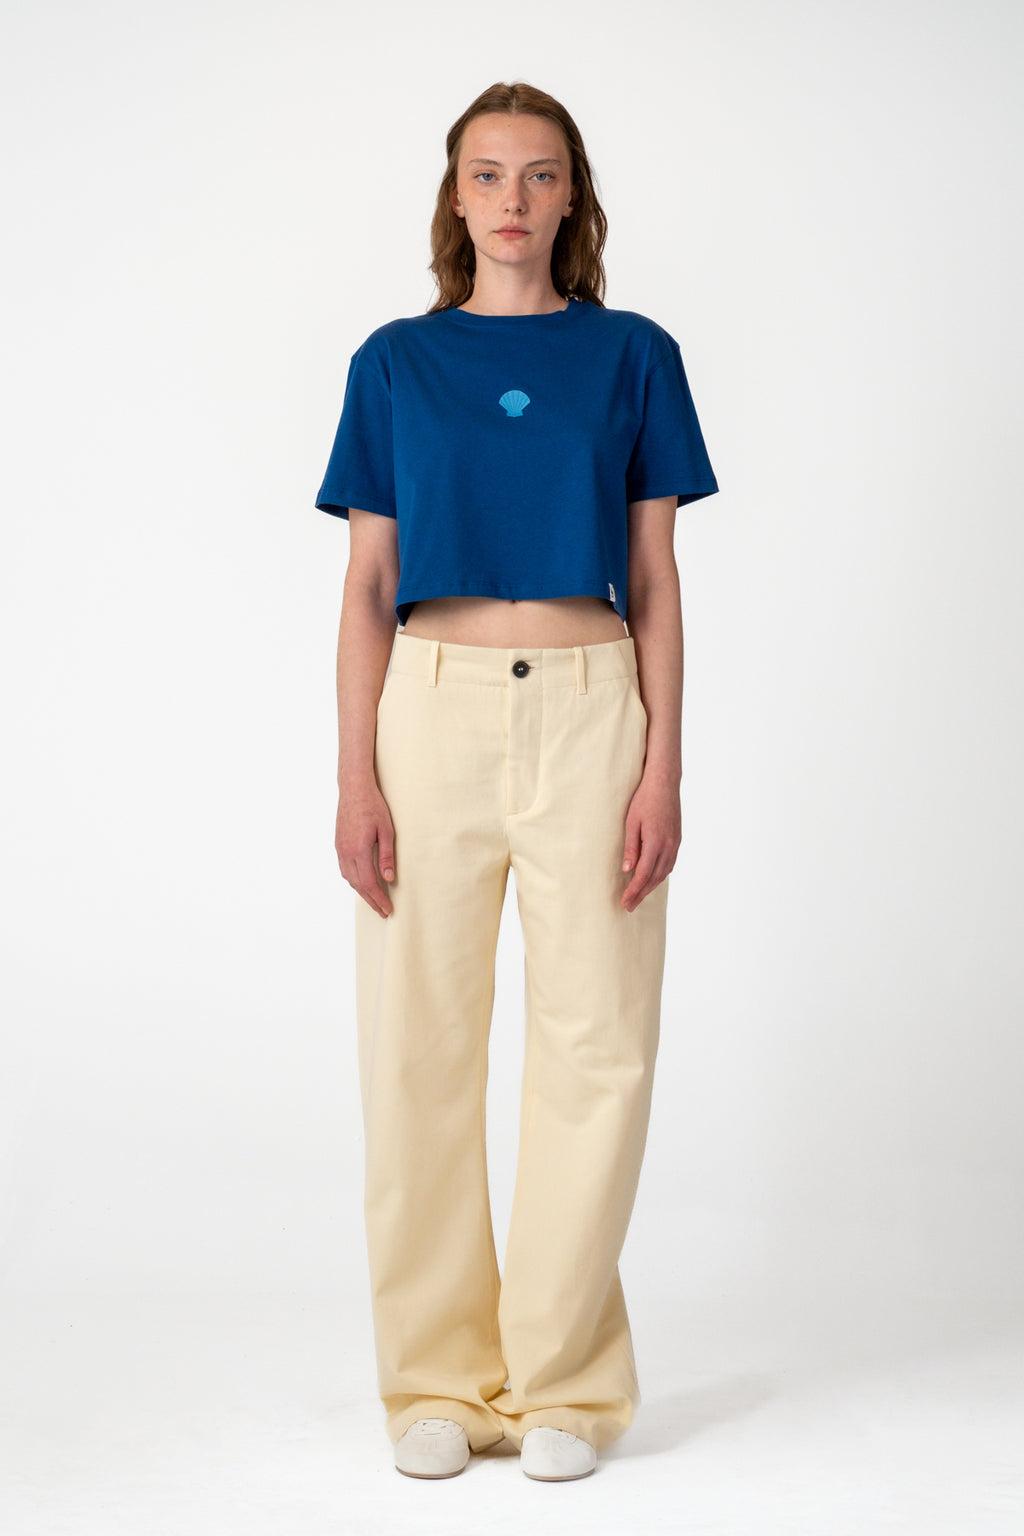 Deniz Kabuğu Supreme Crop T-shirt  - Lacivert